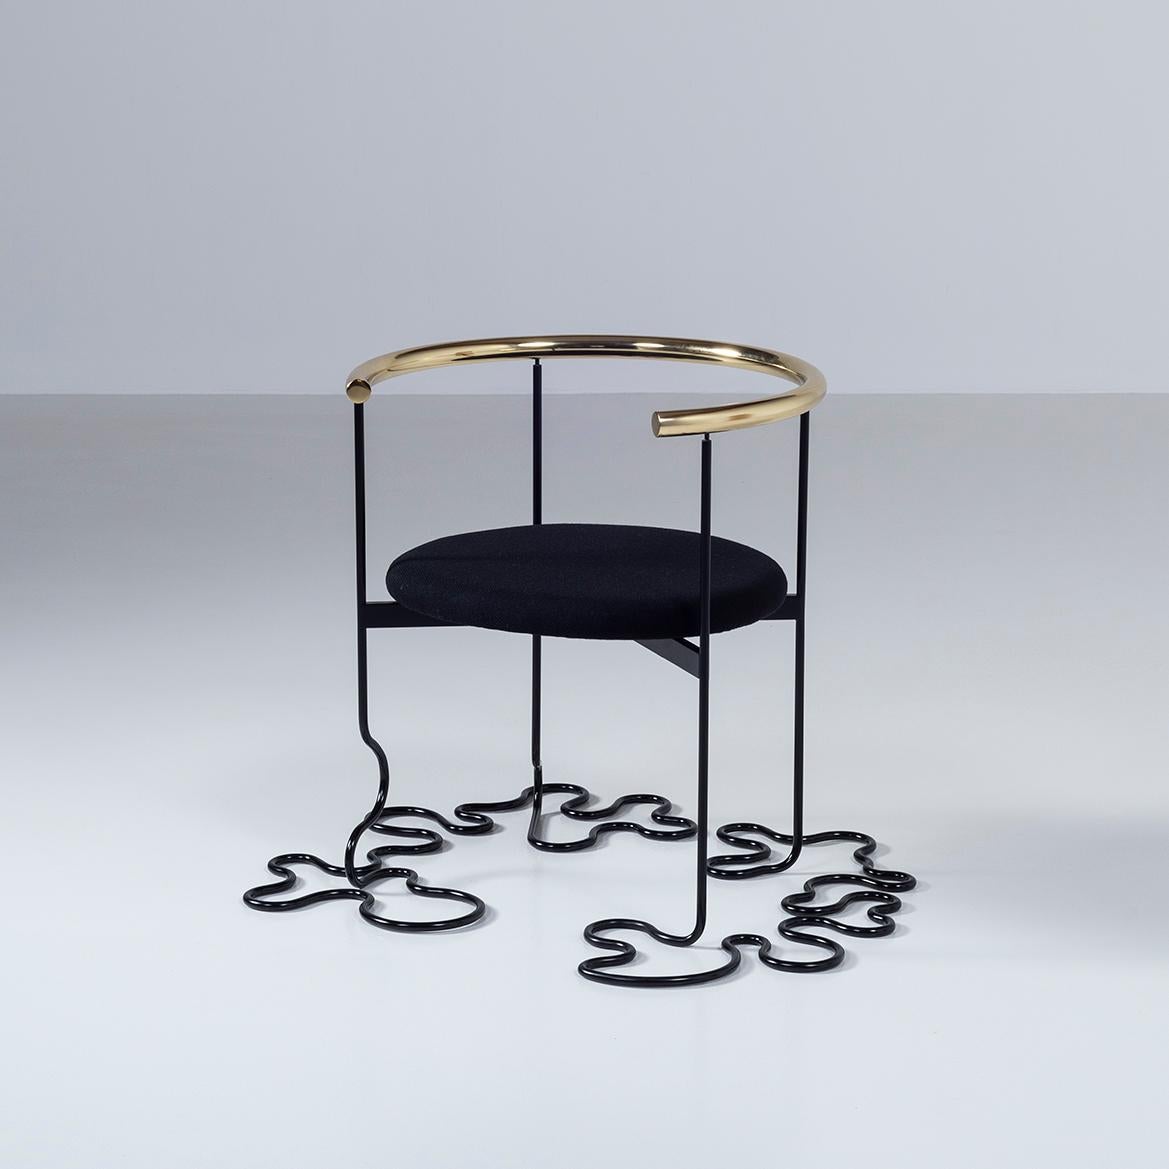 ofostry chair designs